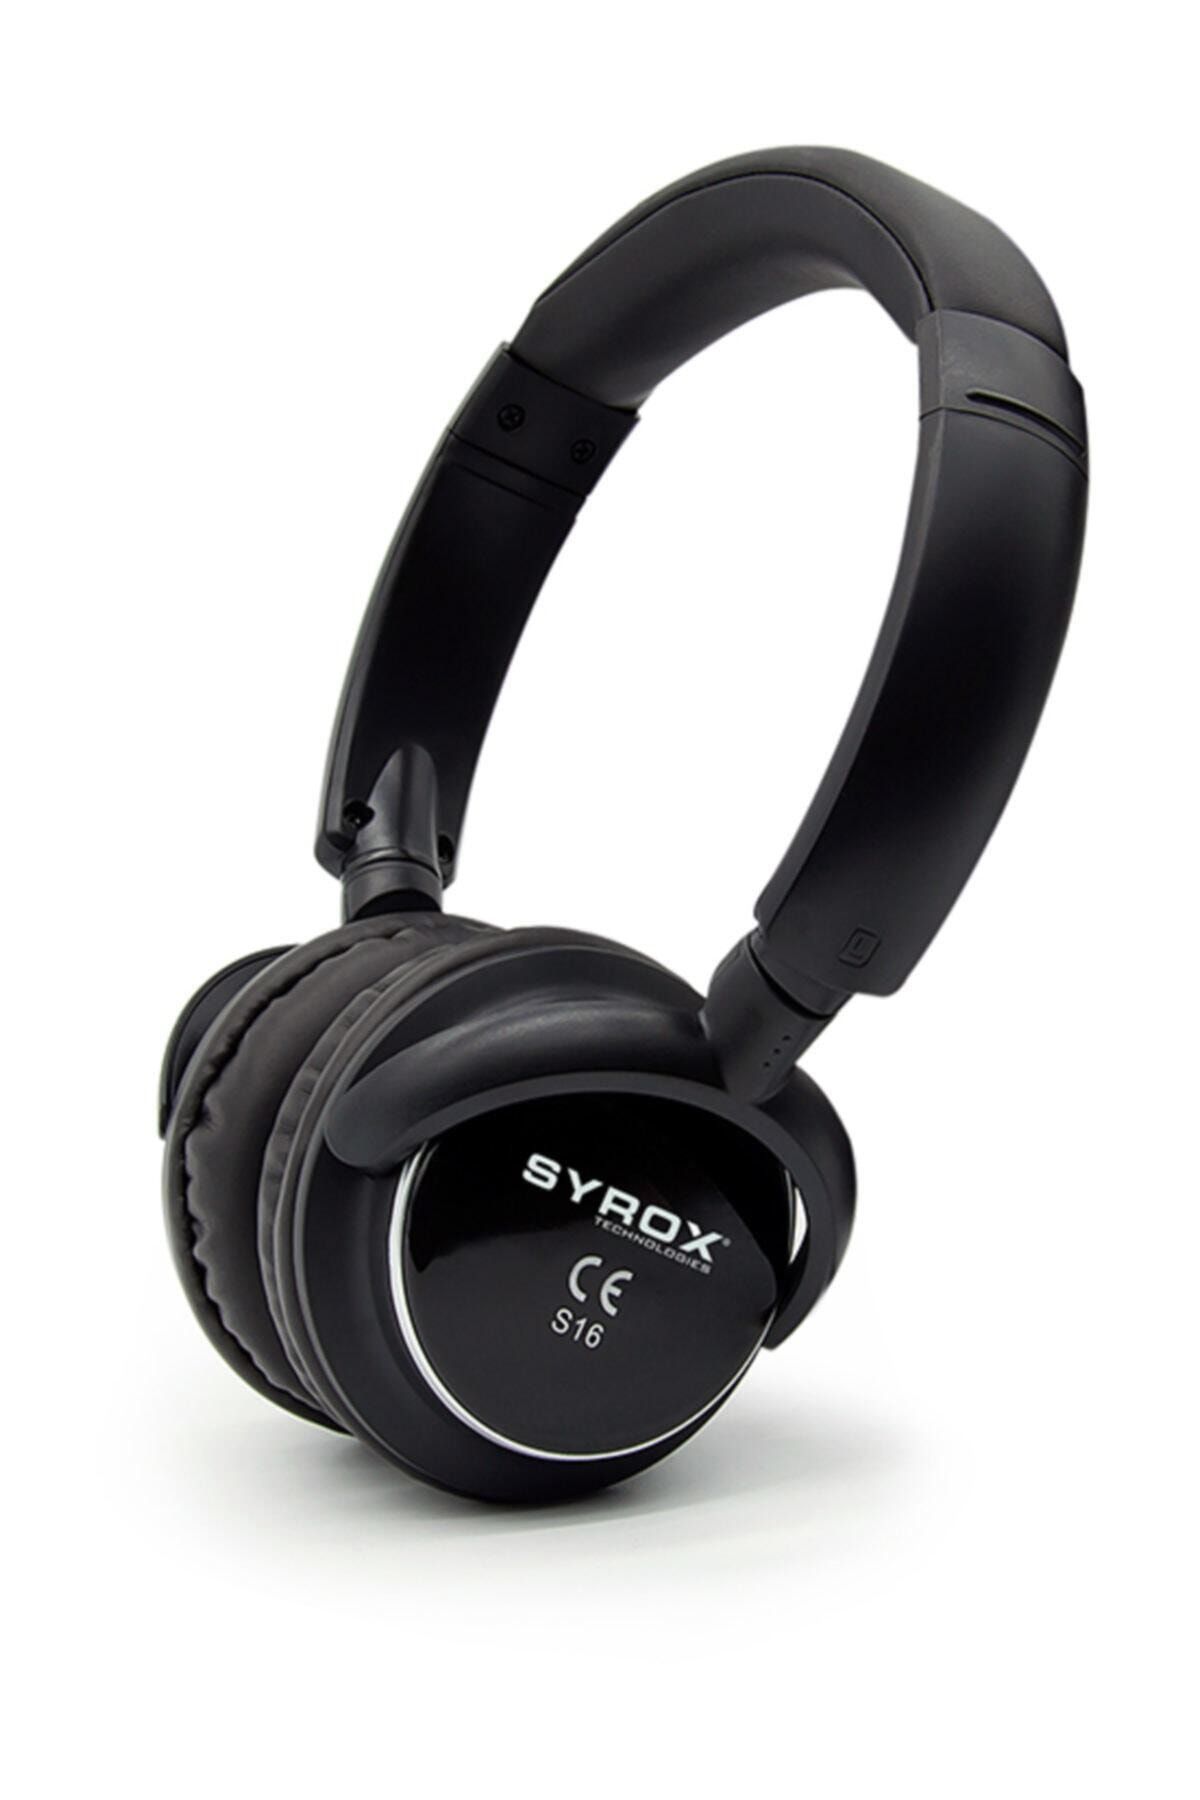 Syrox Siyah J-84 As16 16 Bluetooth 4 Fonksiyonlu Kulak Üstü Kulaklık S16